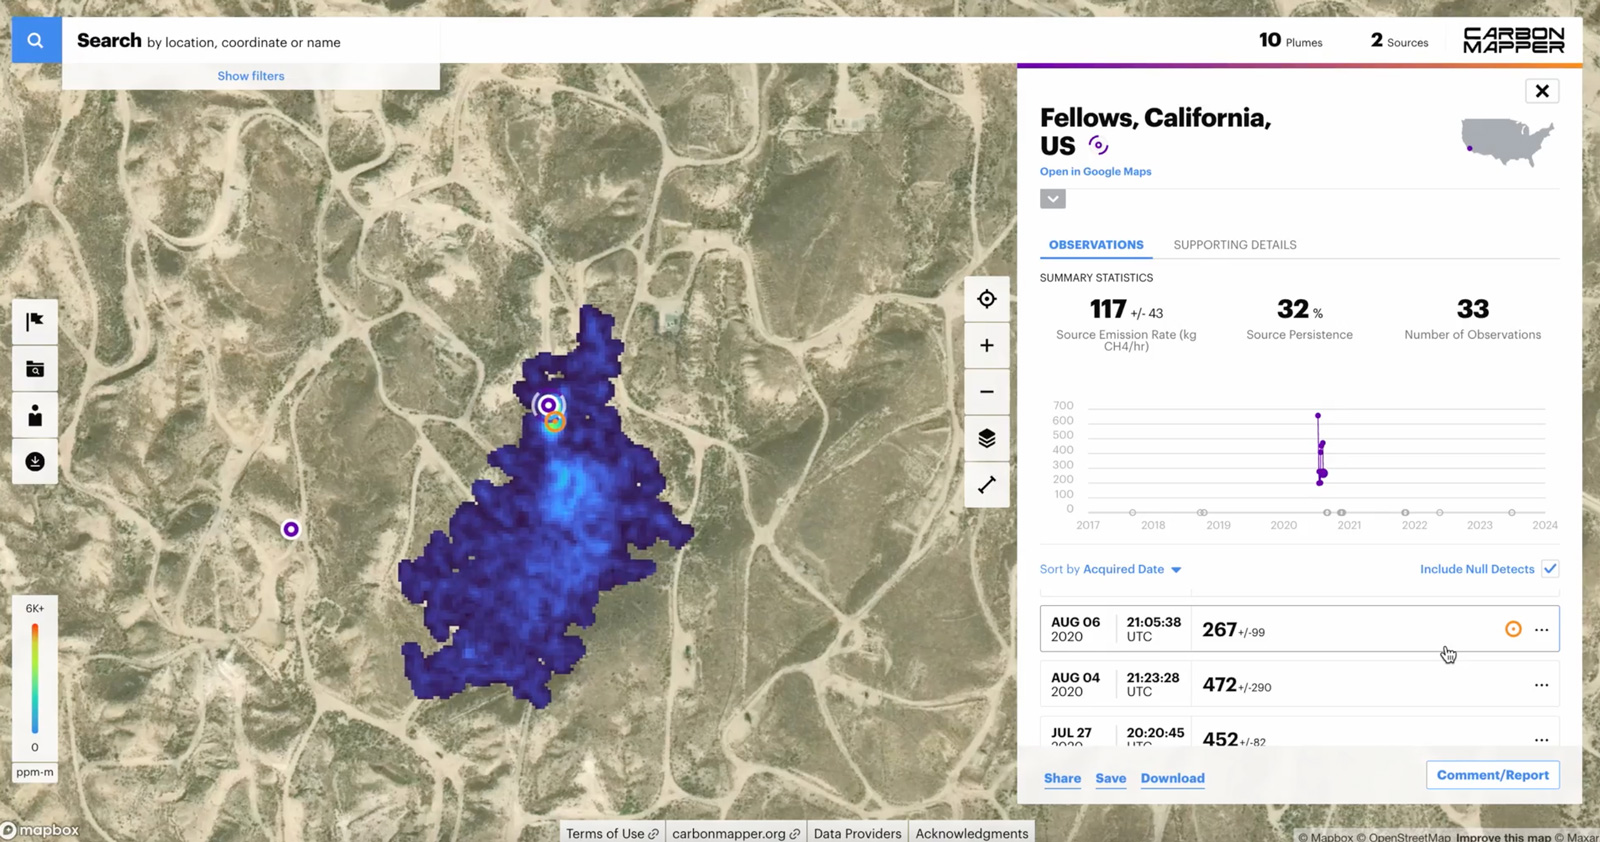 A screenshot of a methane gas plume in California